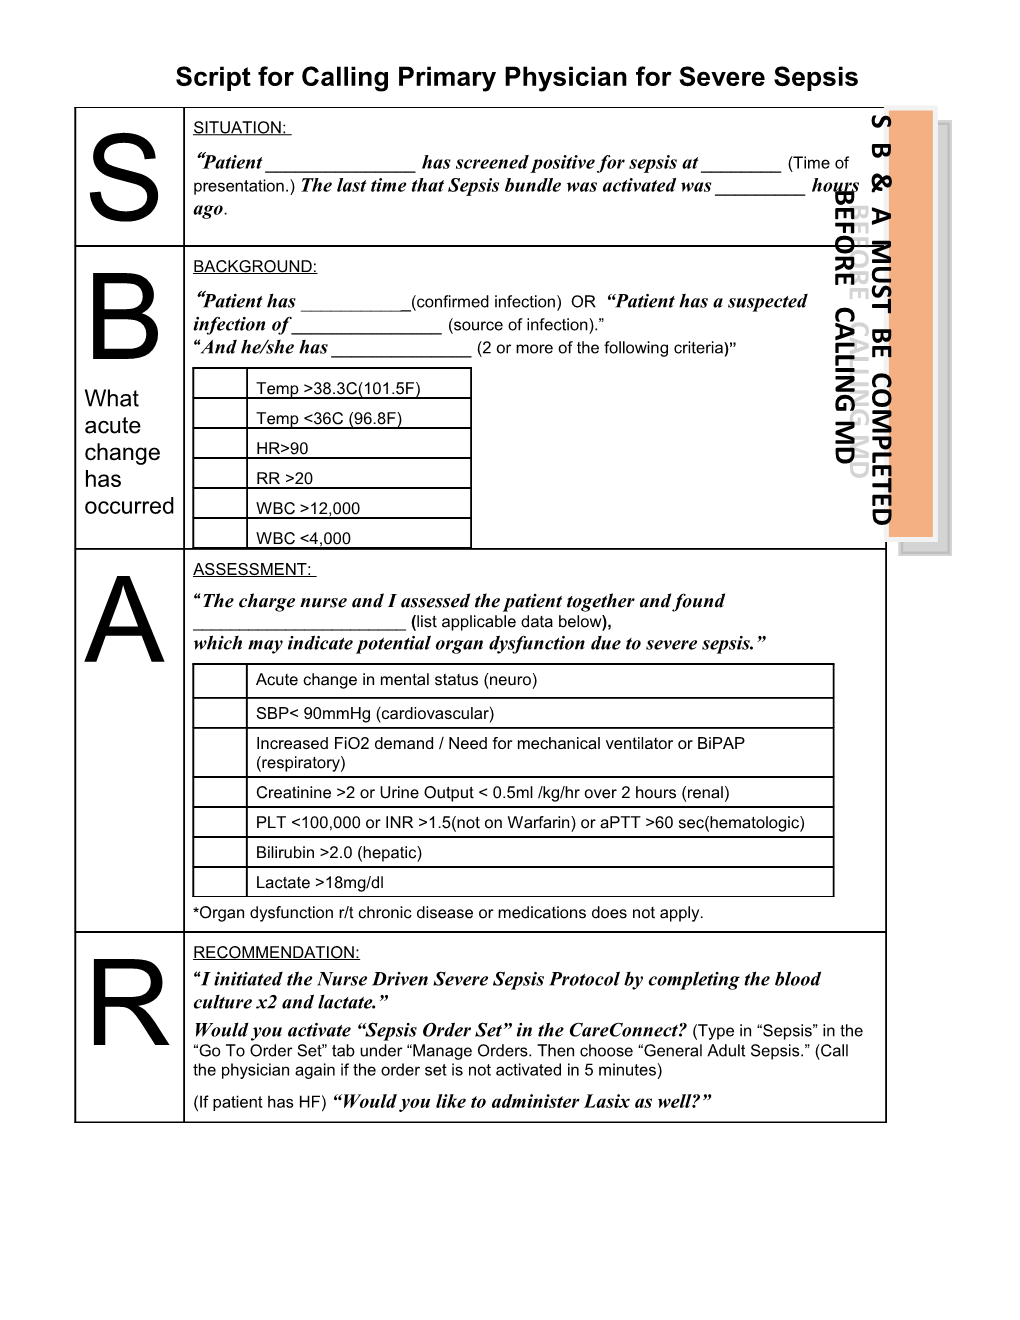 SBAR Transfer Faxed Report to Intermediate Care Unit